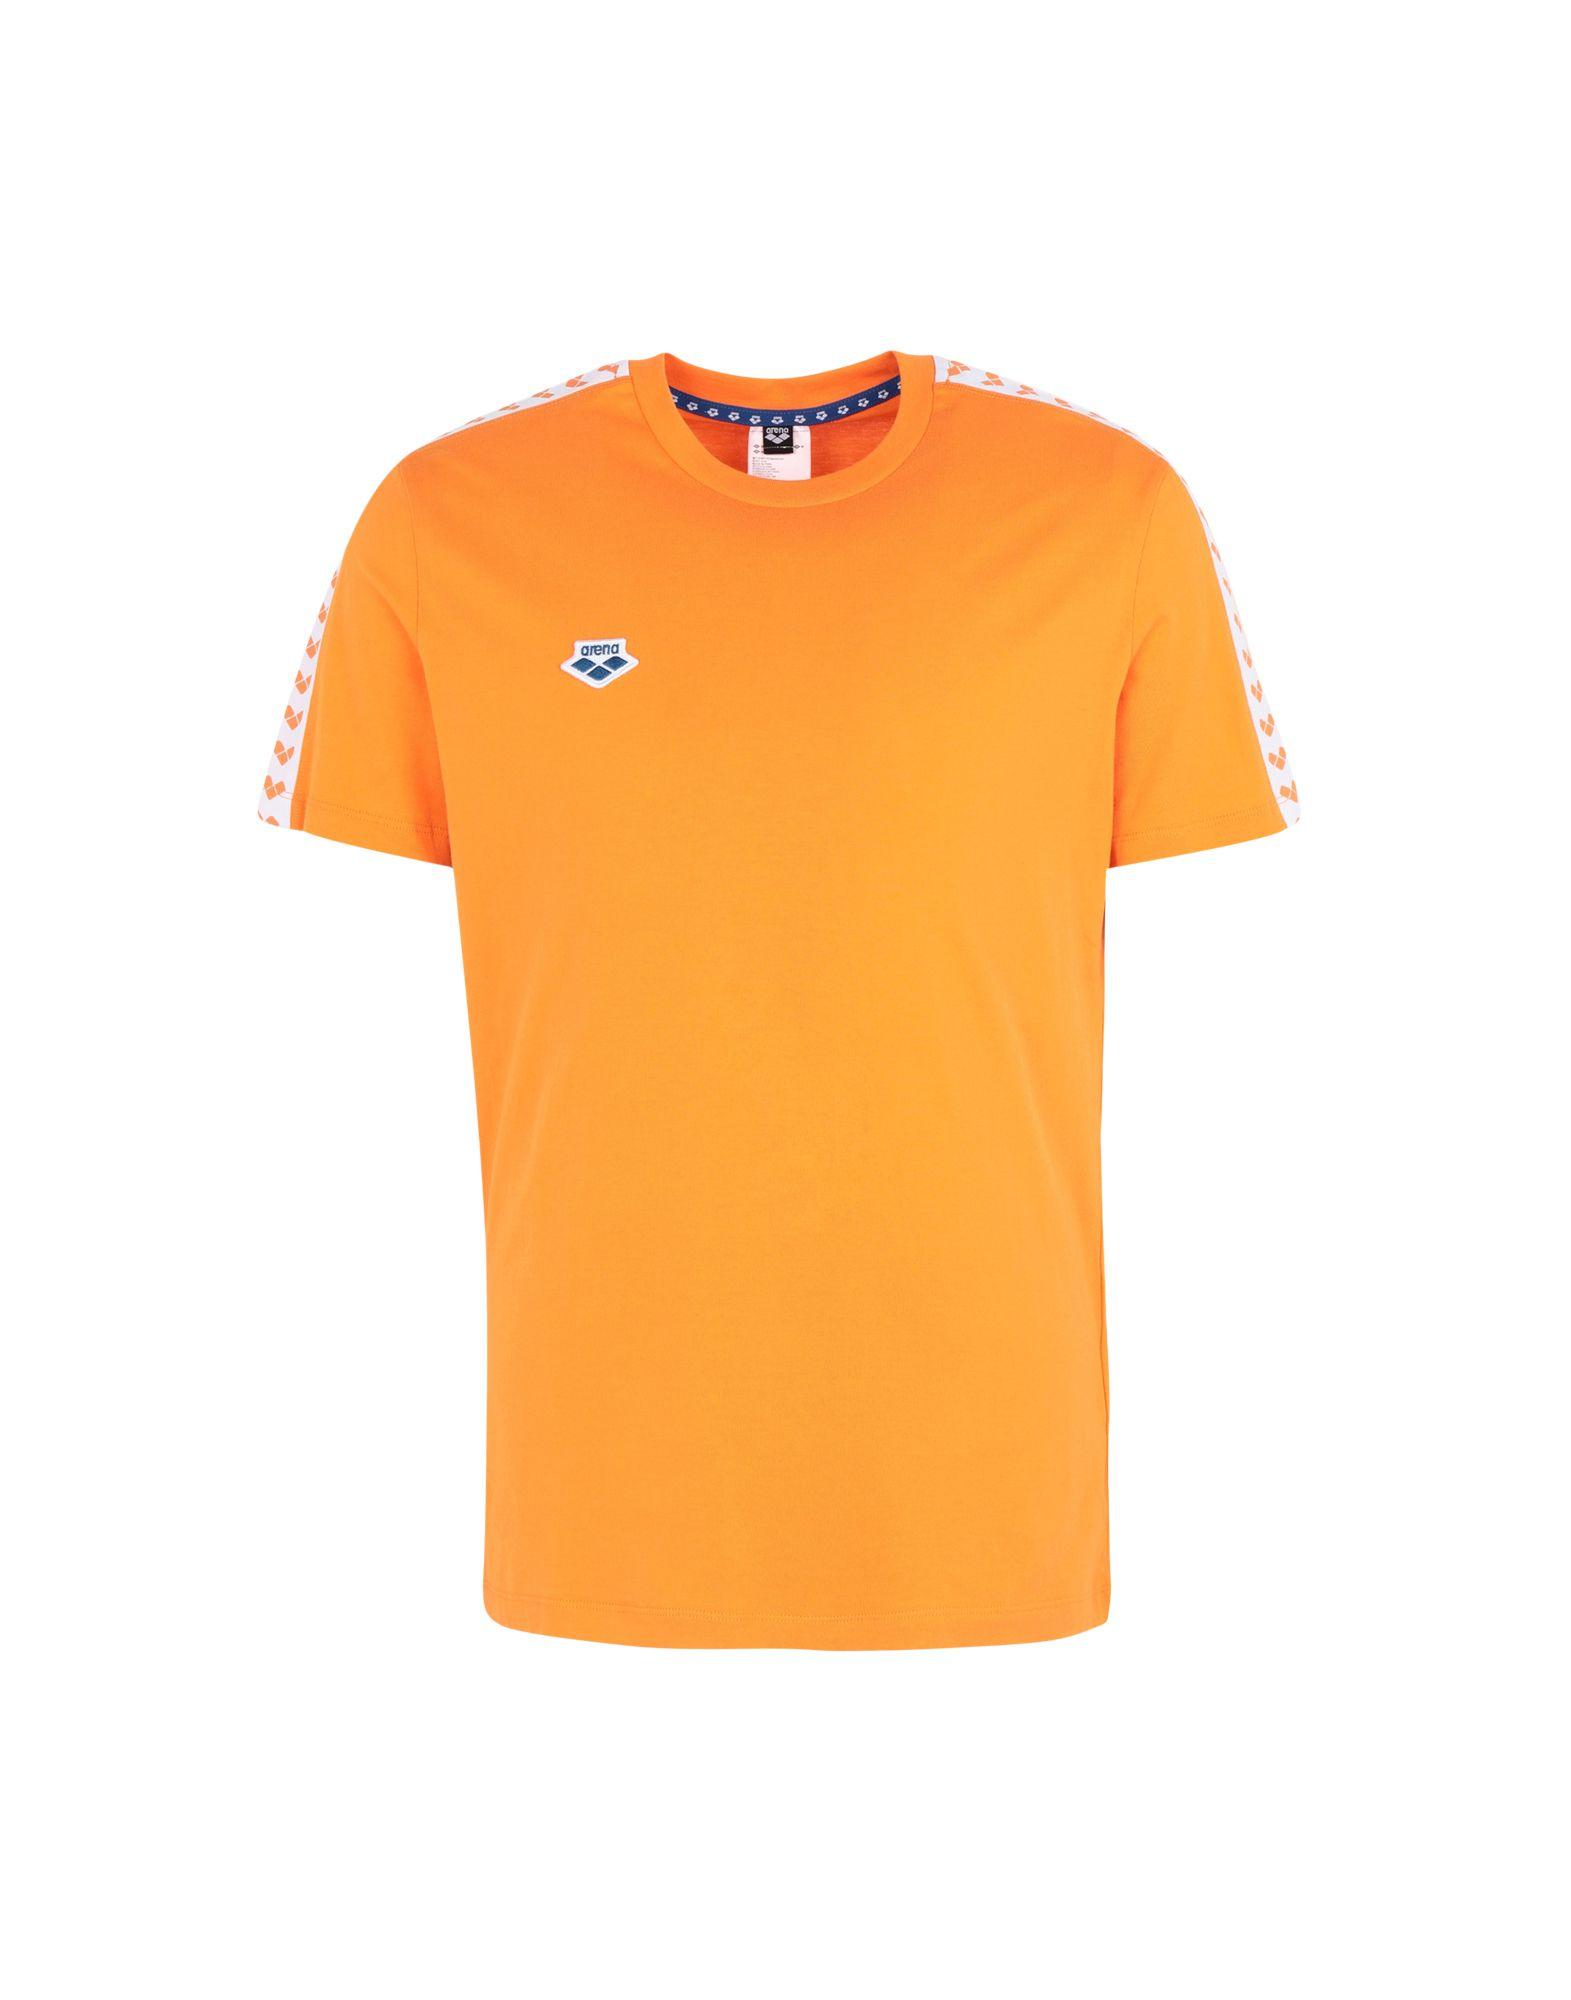 Arena T-shirt in Orange for Men - Lyst